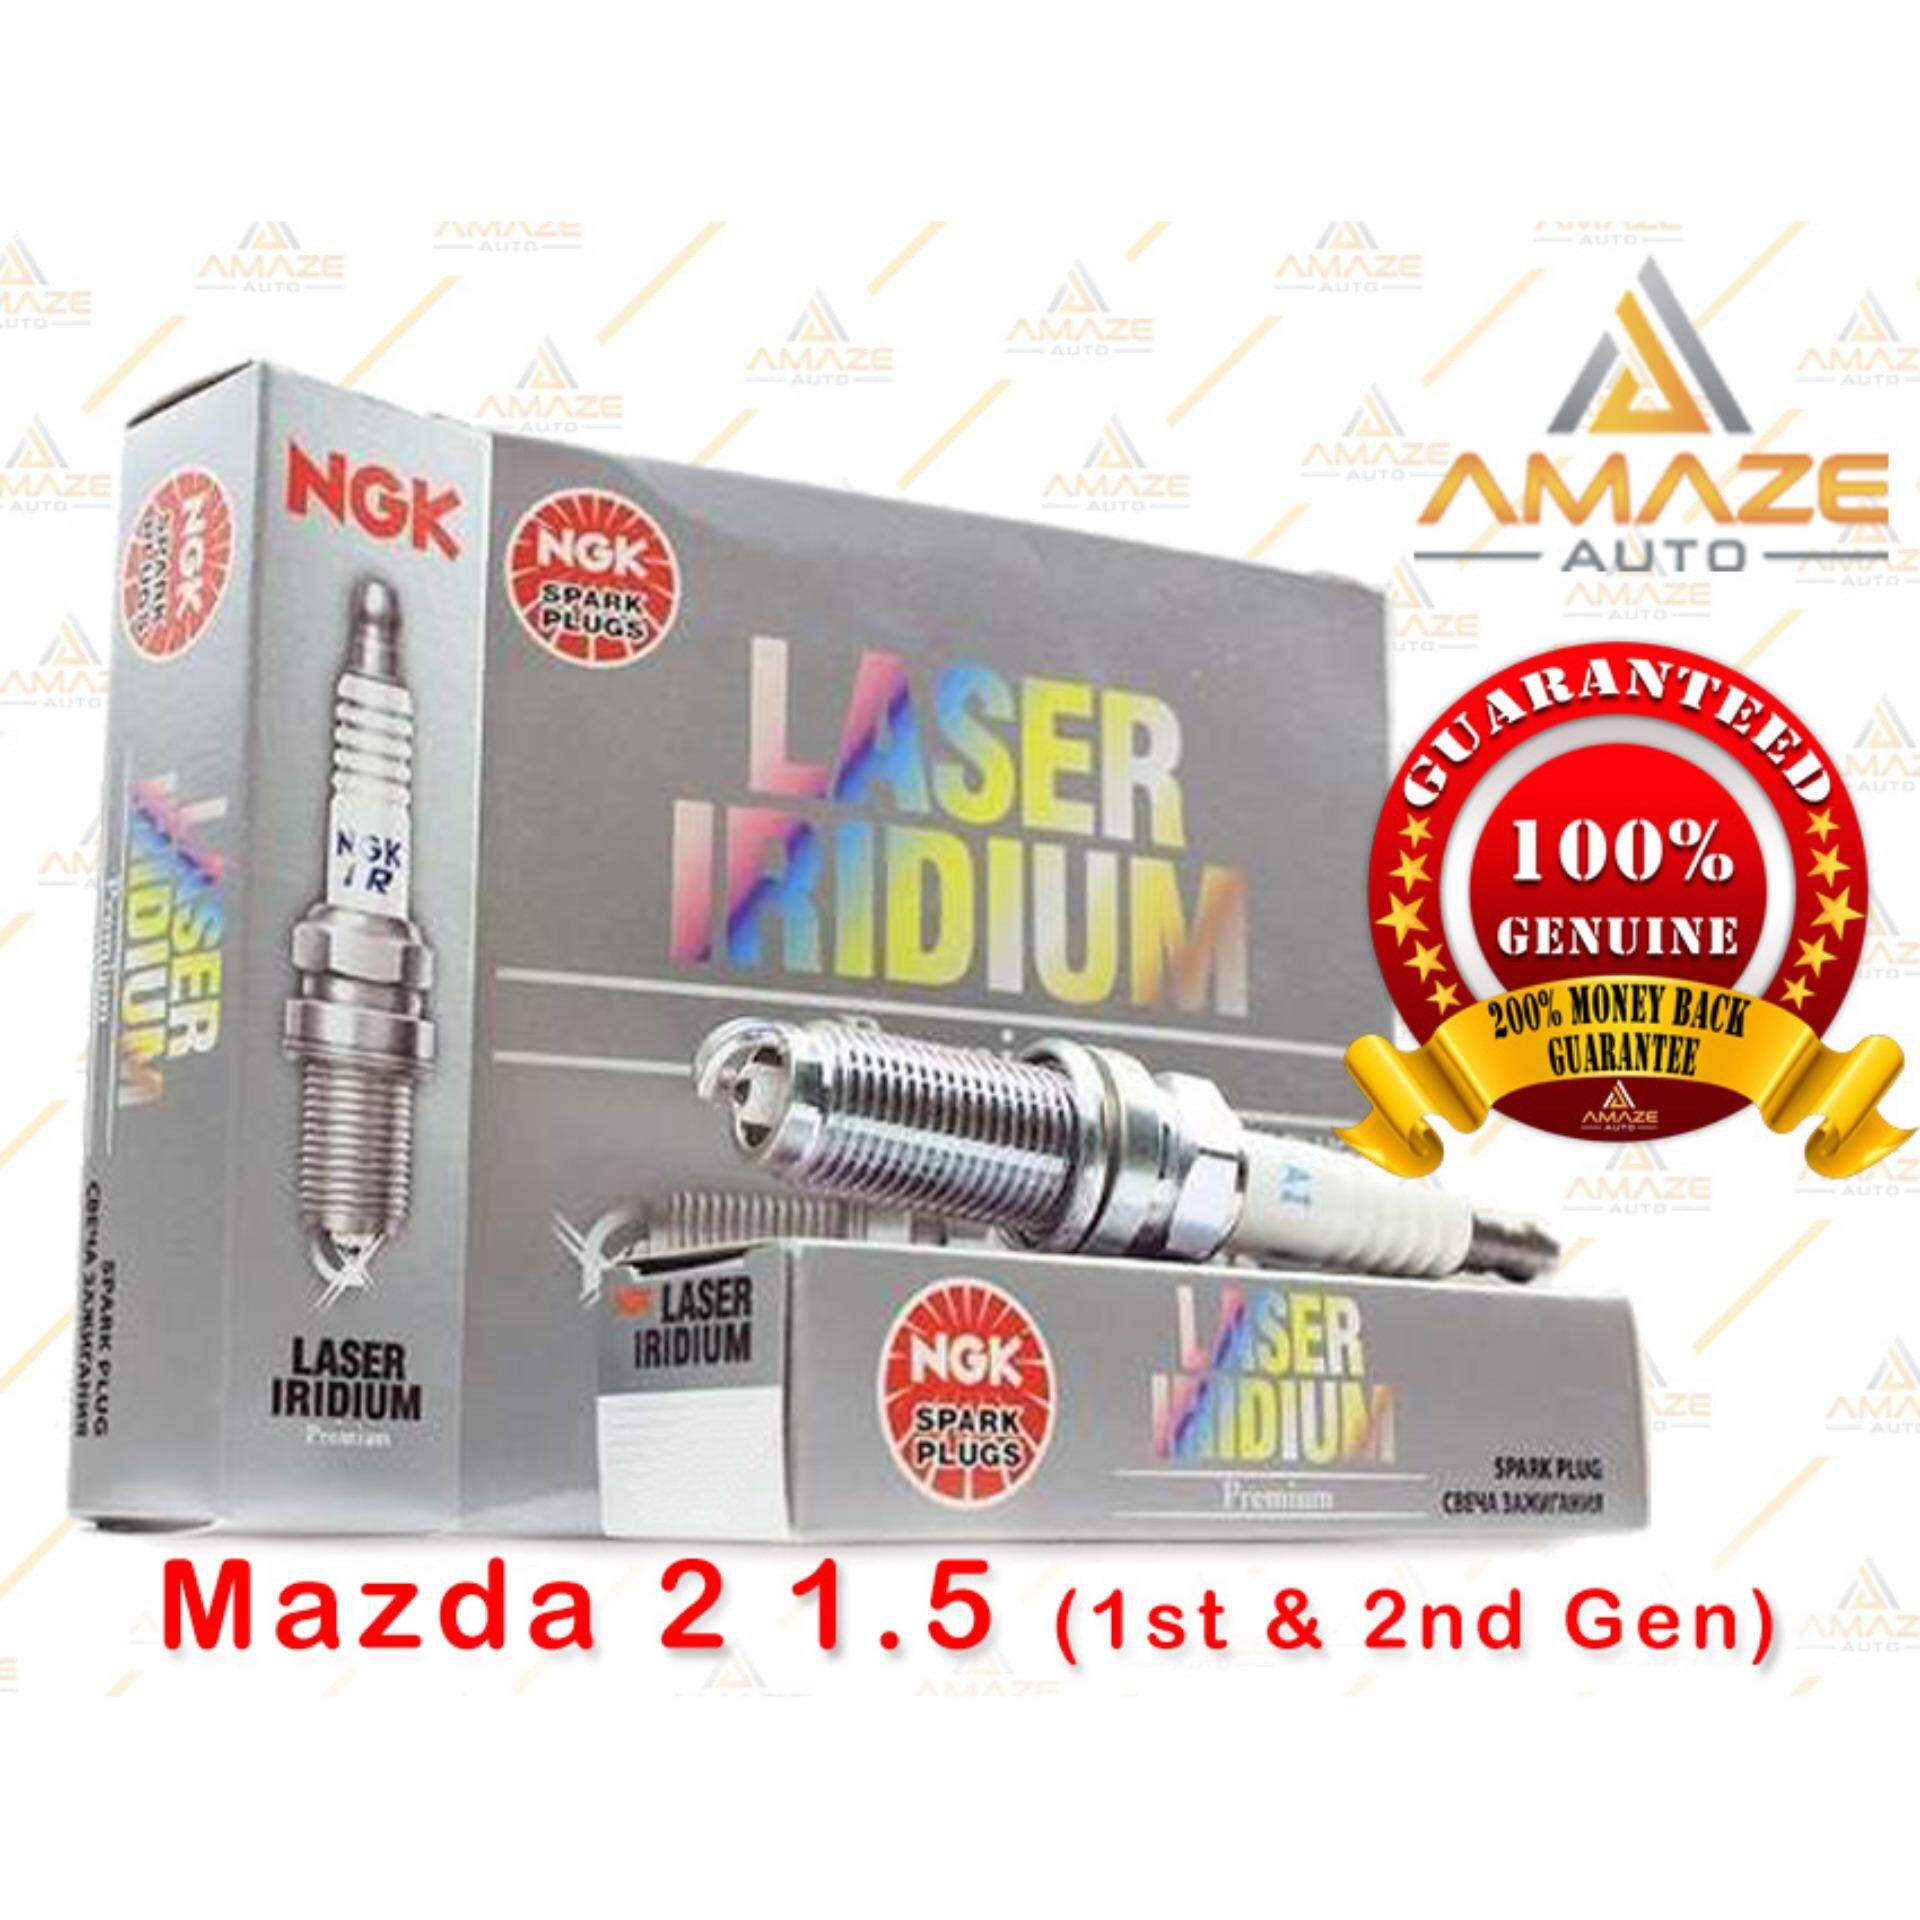 NGK Laser Iridium Spark Plug for Mazda 2 1.5 (09 - 14)